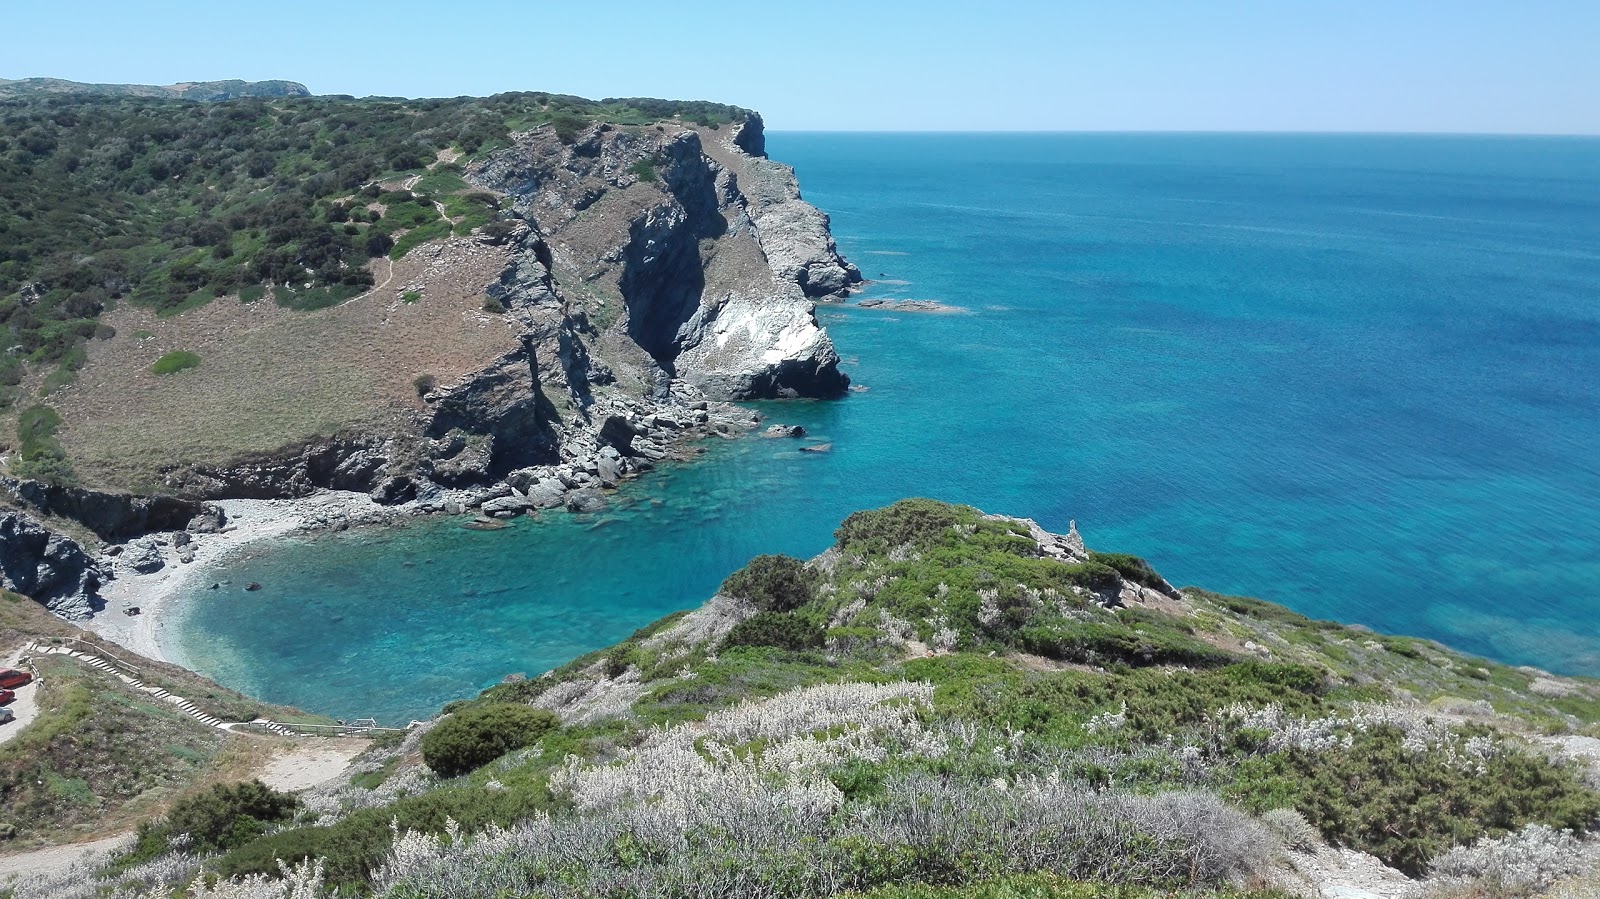 Foto de Spiaggia di Lampianu com pequena baía